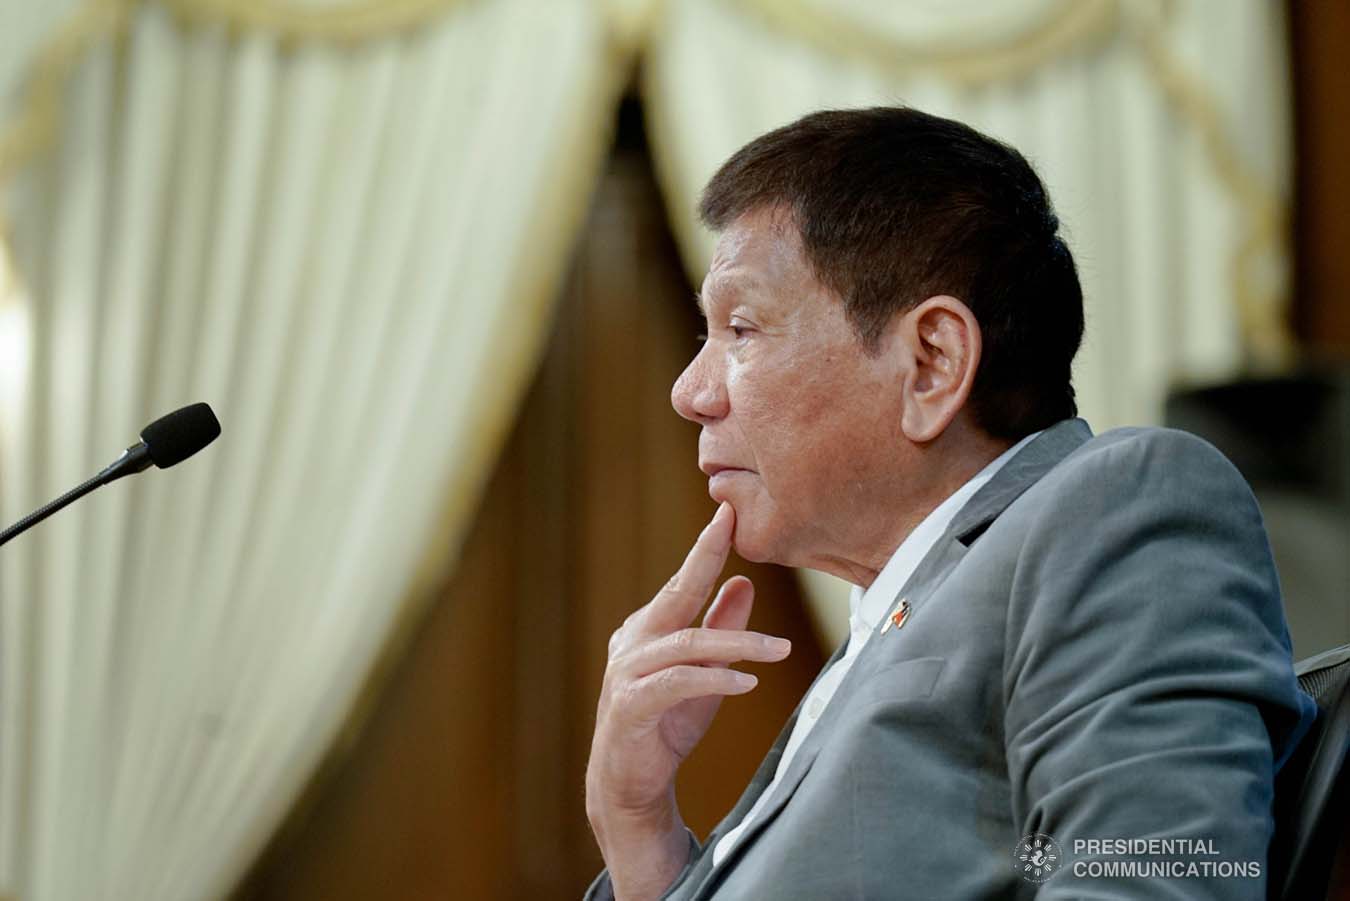 The Philippines should maintain its neutrality amid the Russian invasion of Ukraine, President Rodrigo Duterte reiterated Thursday.